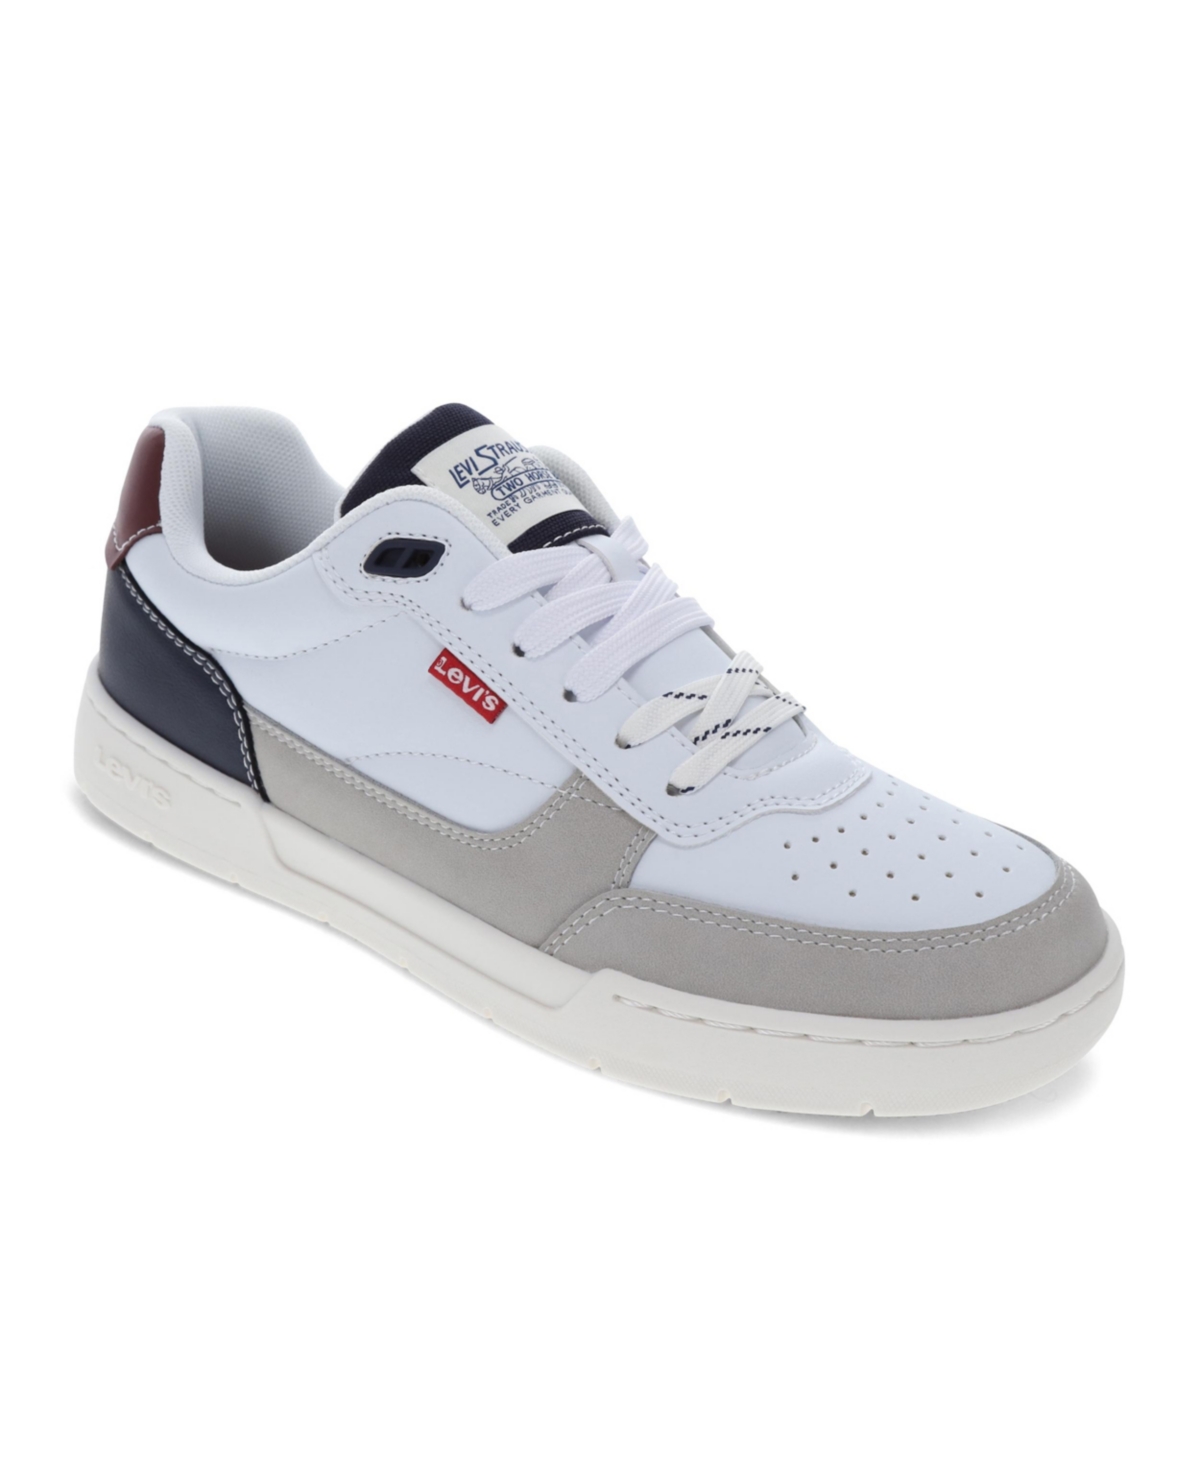 Men's La Jolla Comfort Lace Up Sneakers - White, Cement, Navy